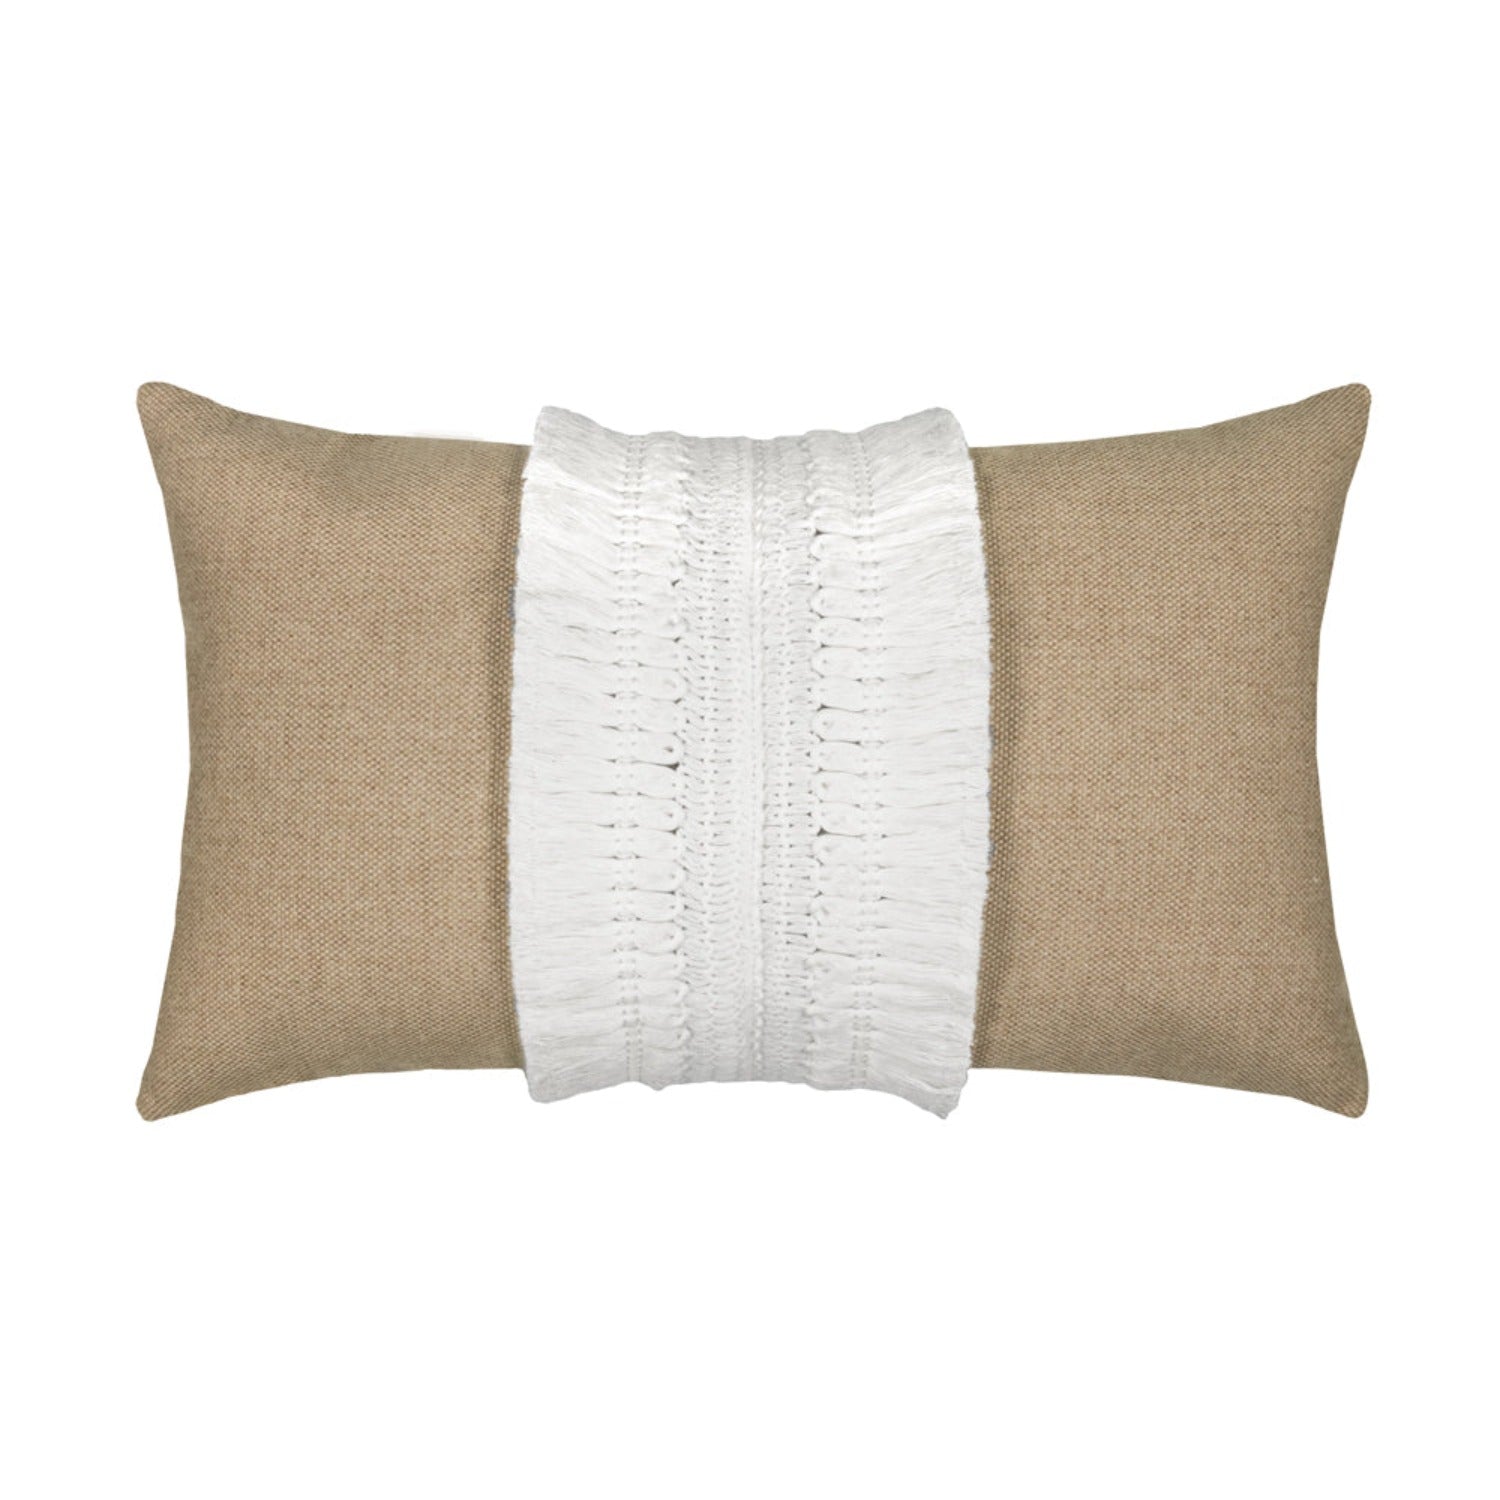 SALE! Elaine Smith 12" x 20" Lumbar Outdoor Pillow - Gobi Sand - Polyester Fiber Fill Throw Pillows 12030997